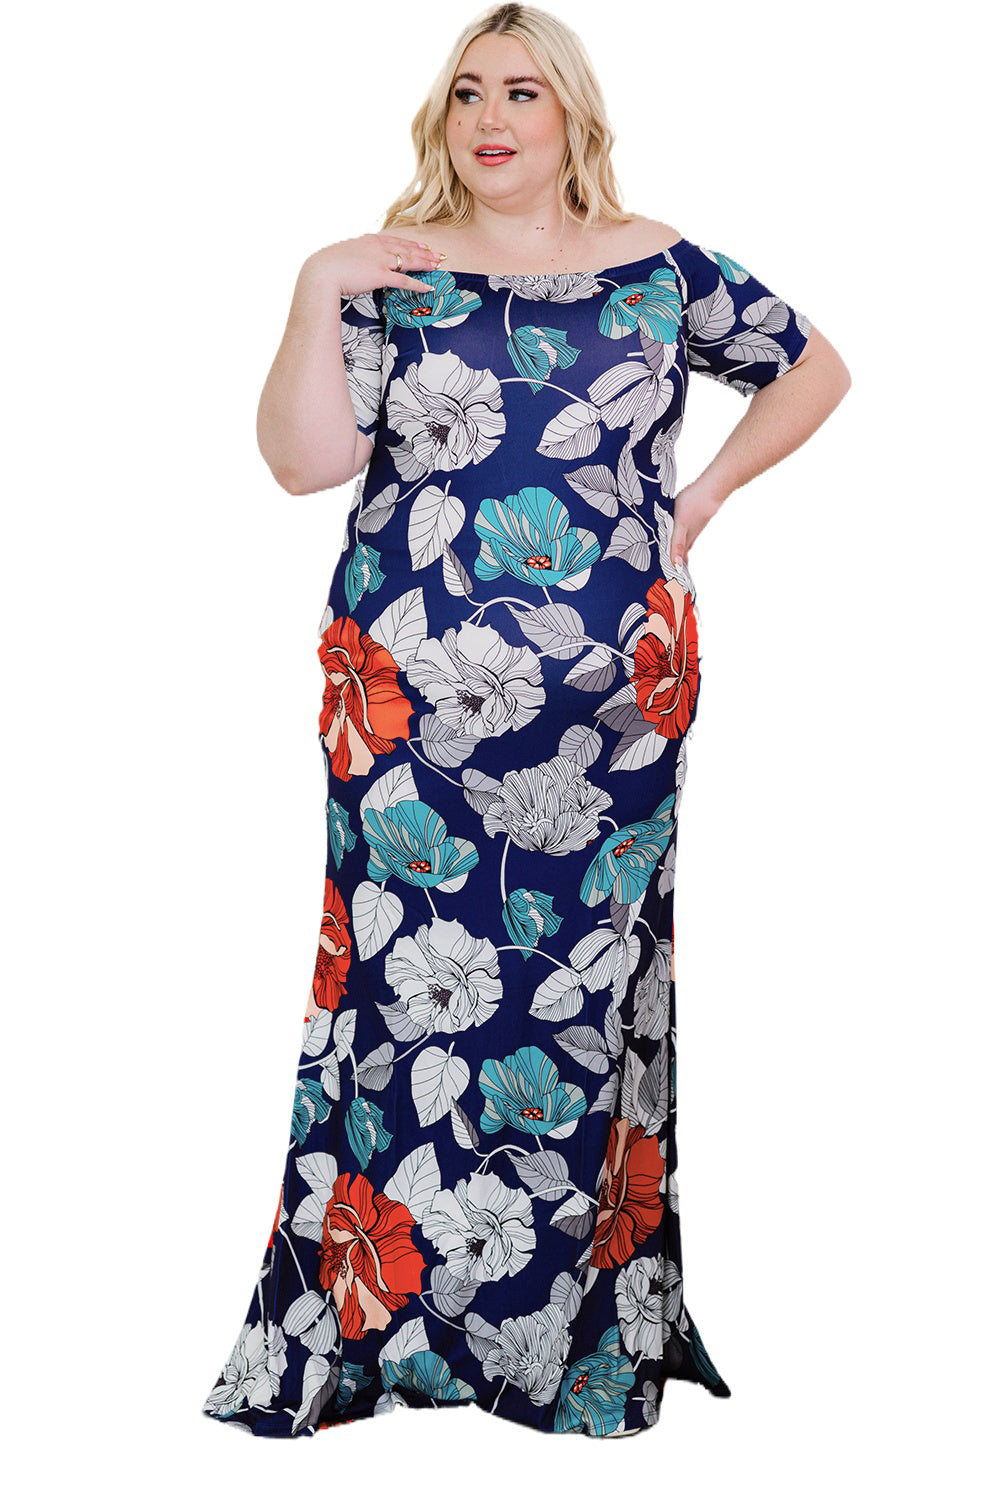 Green Off-the-shoulder Floral Print Plus size Maxi Dress